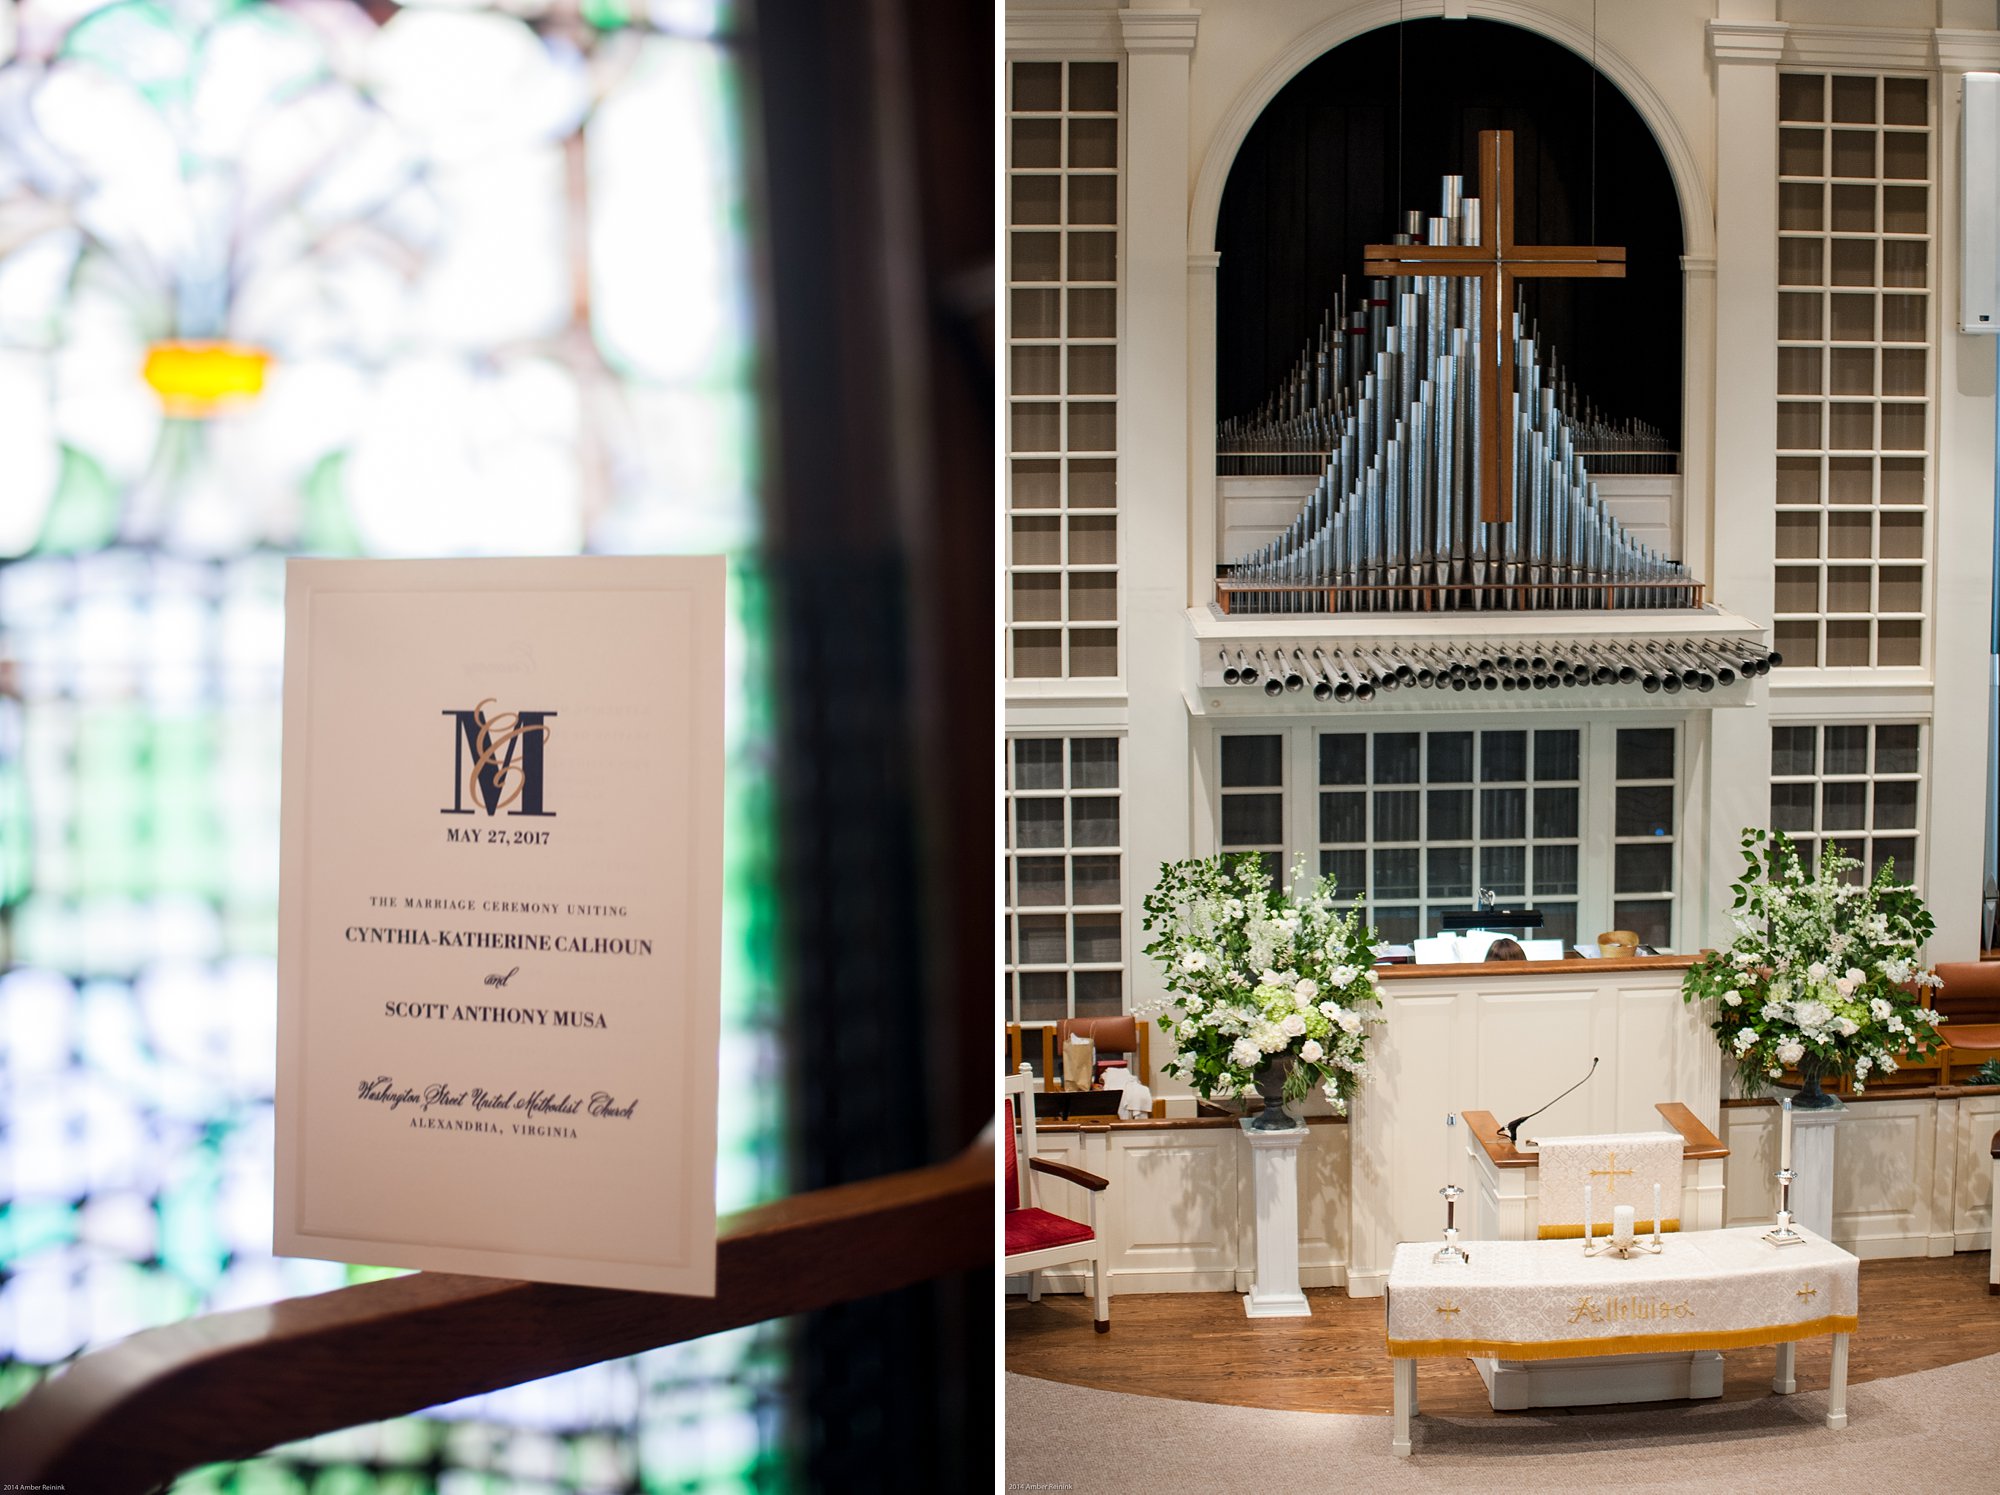 wedding program and interior of Washington street united methodist church during wedding